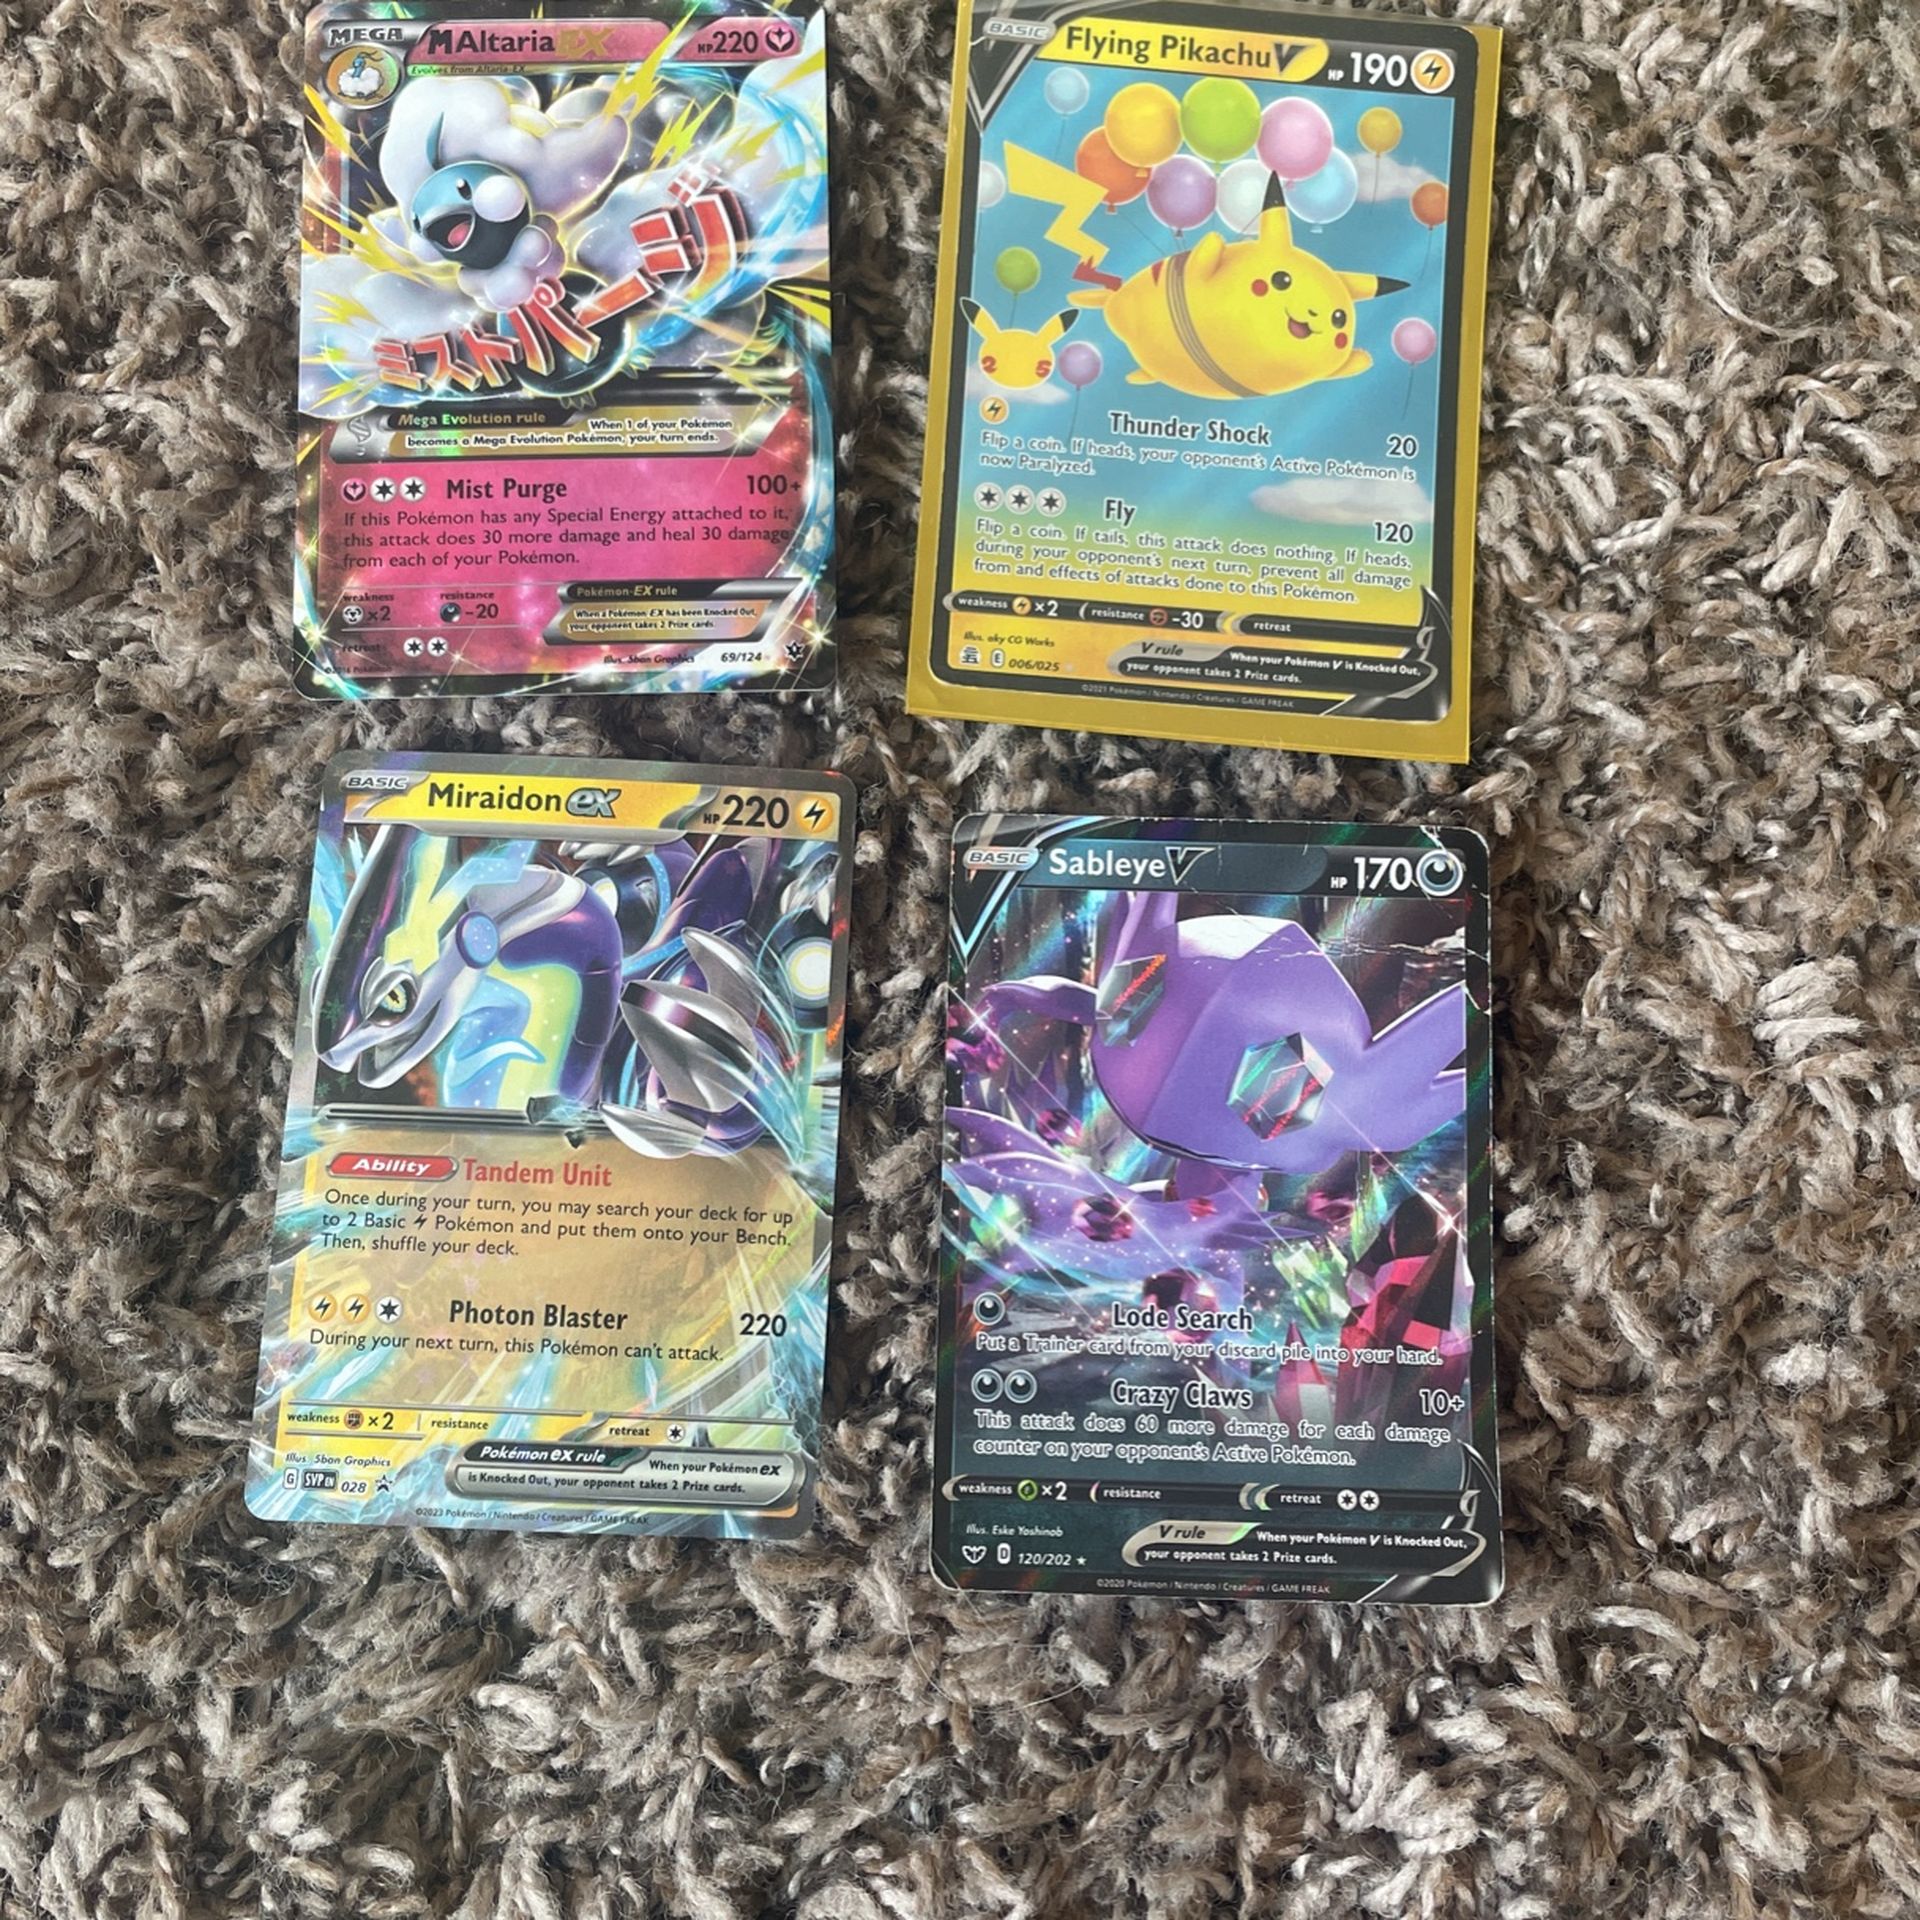 4 Good Pokémon Cards